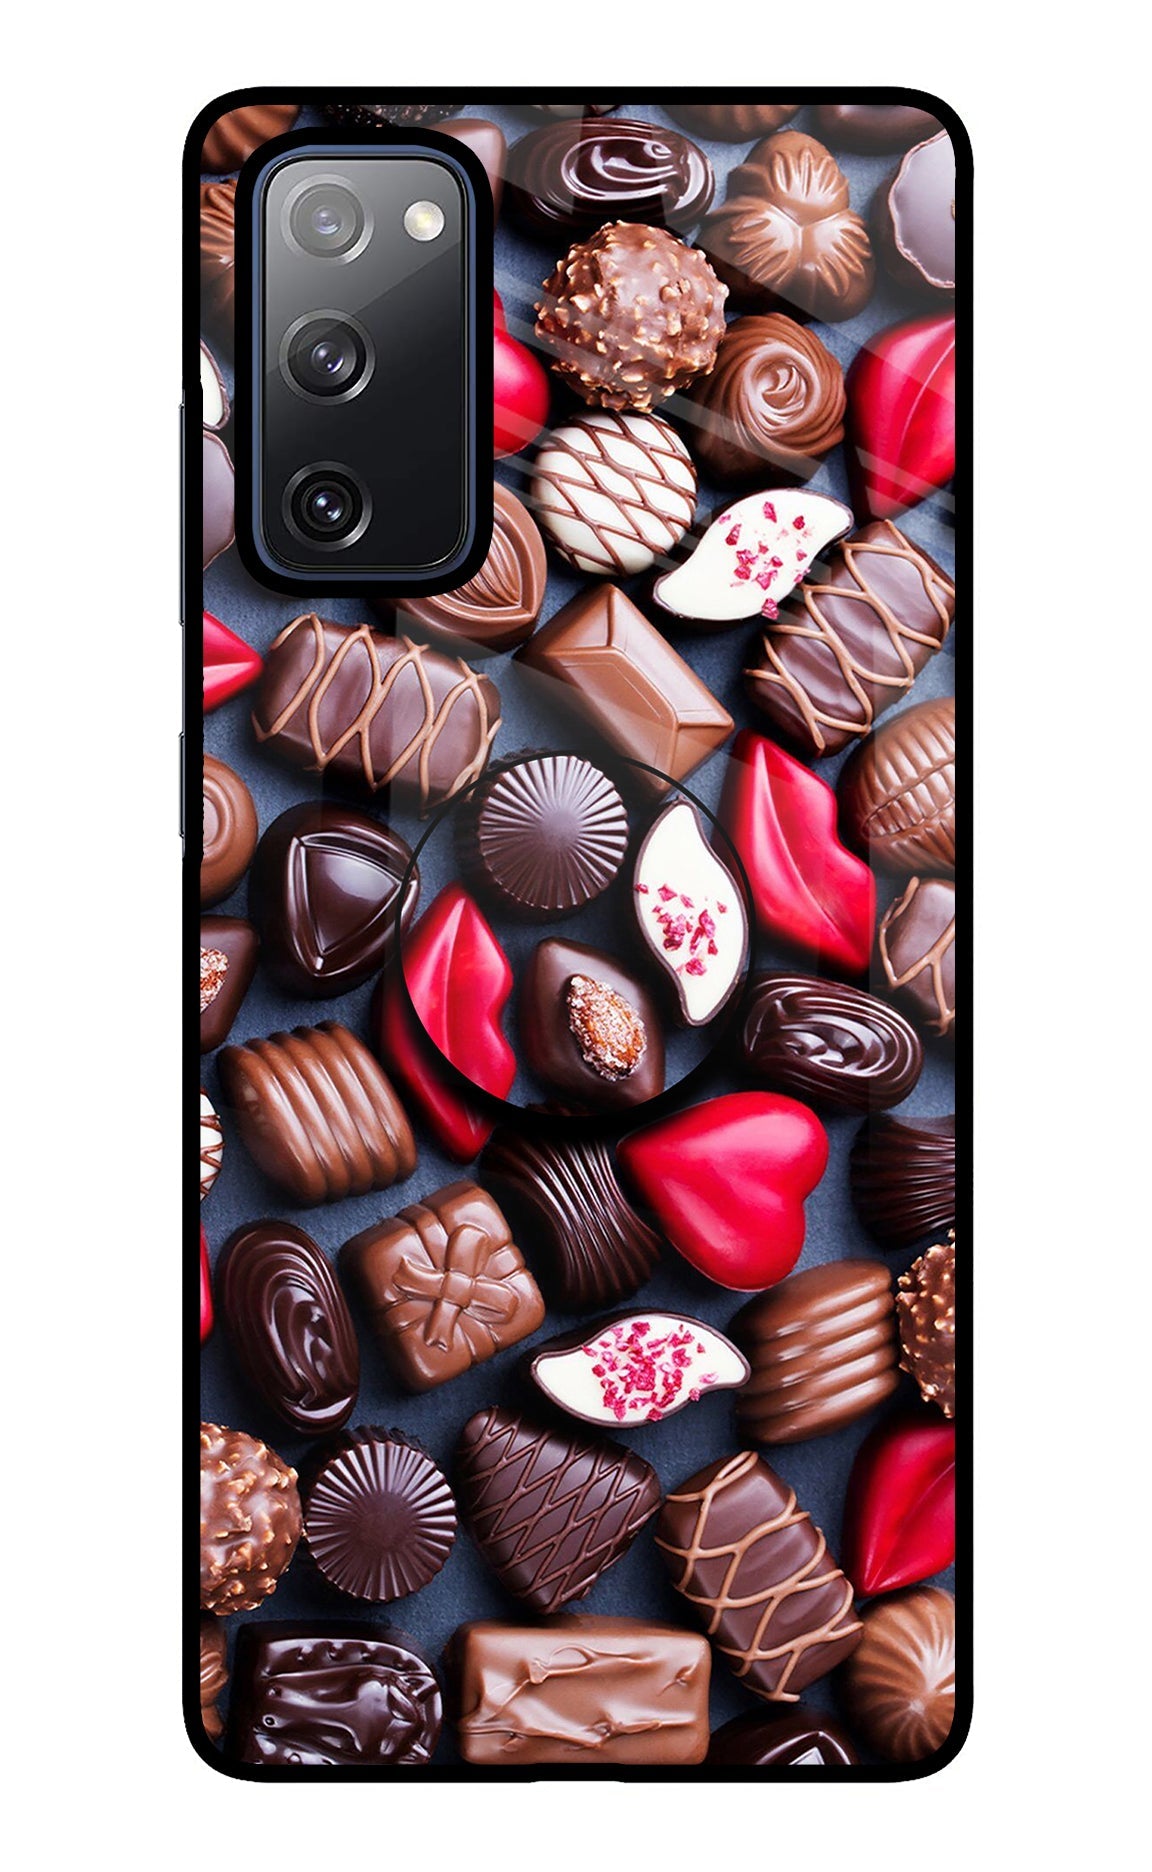 Chocolates Samsung S20 FE Glass Case